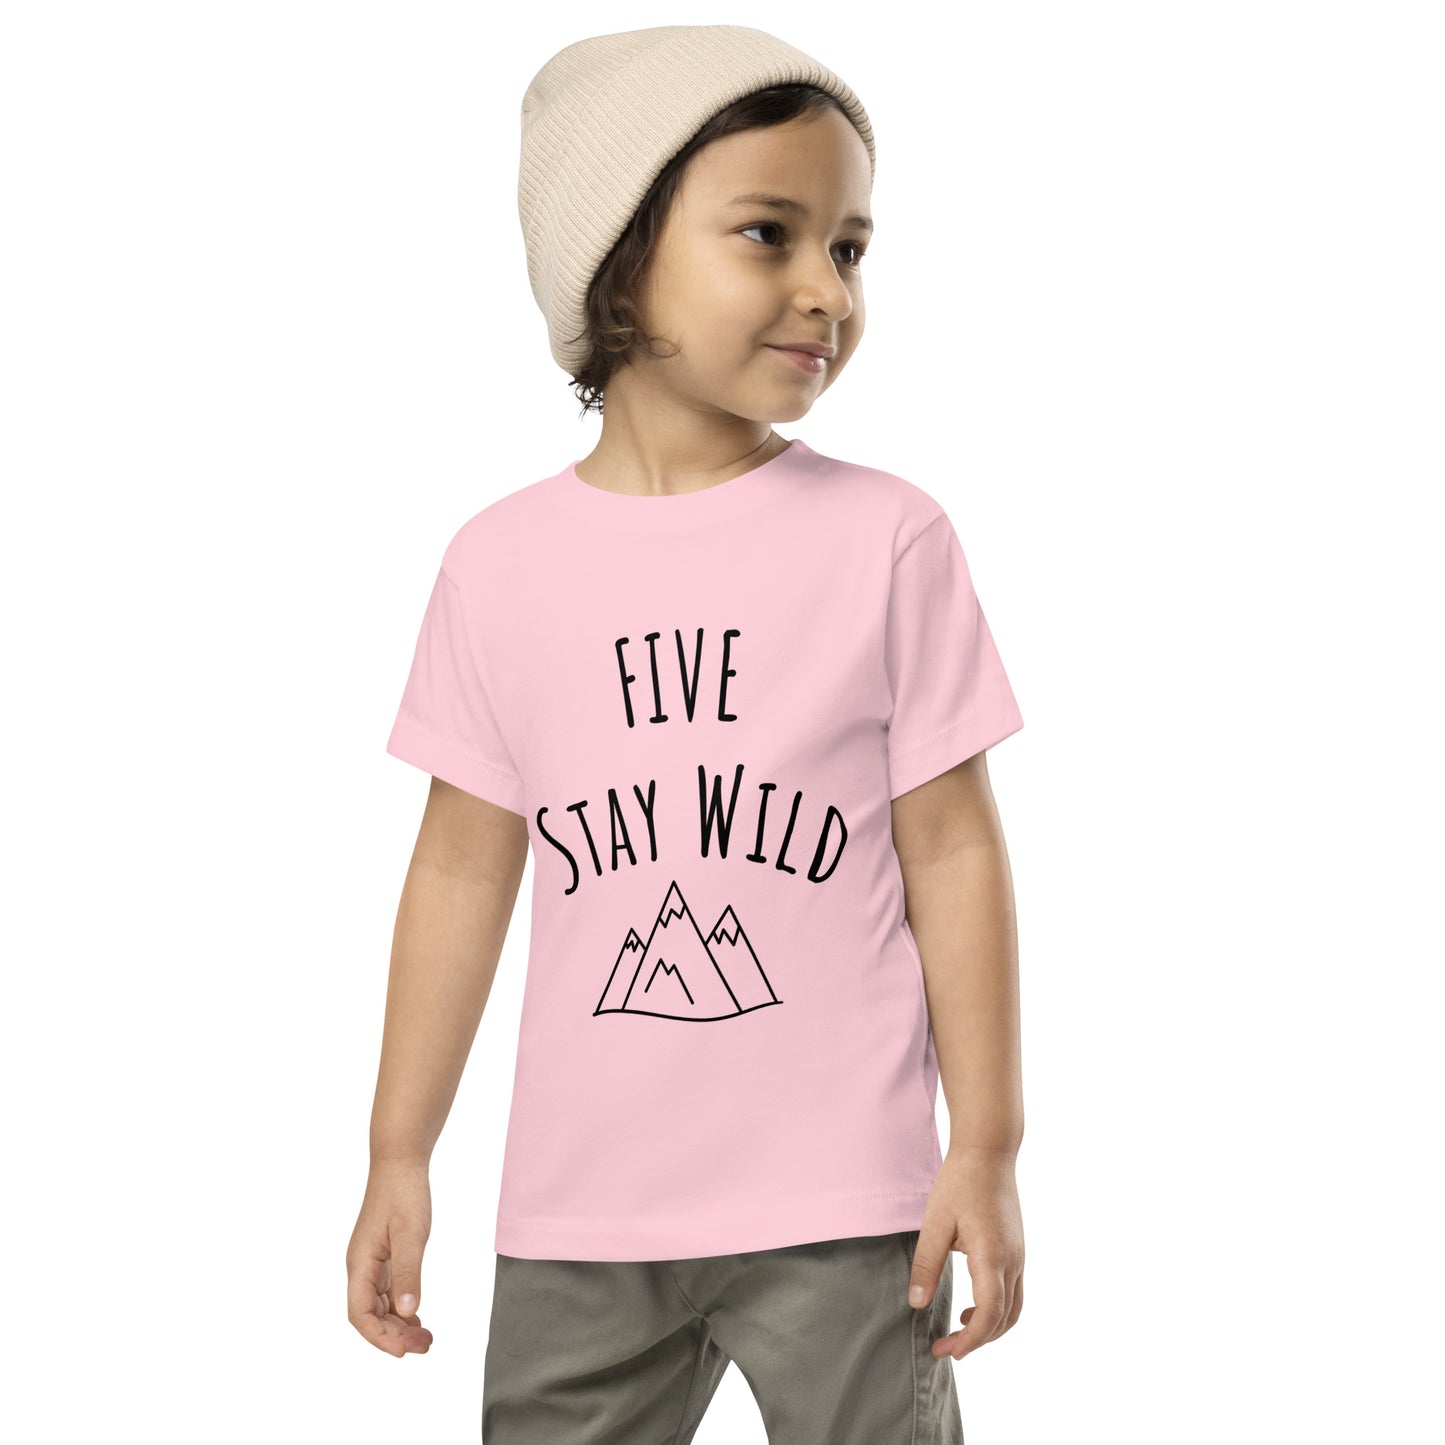 Toddler Short Sleeve Tee - Five stay wild-black